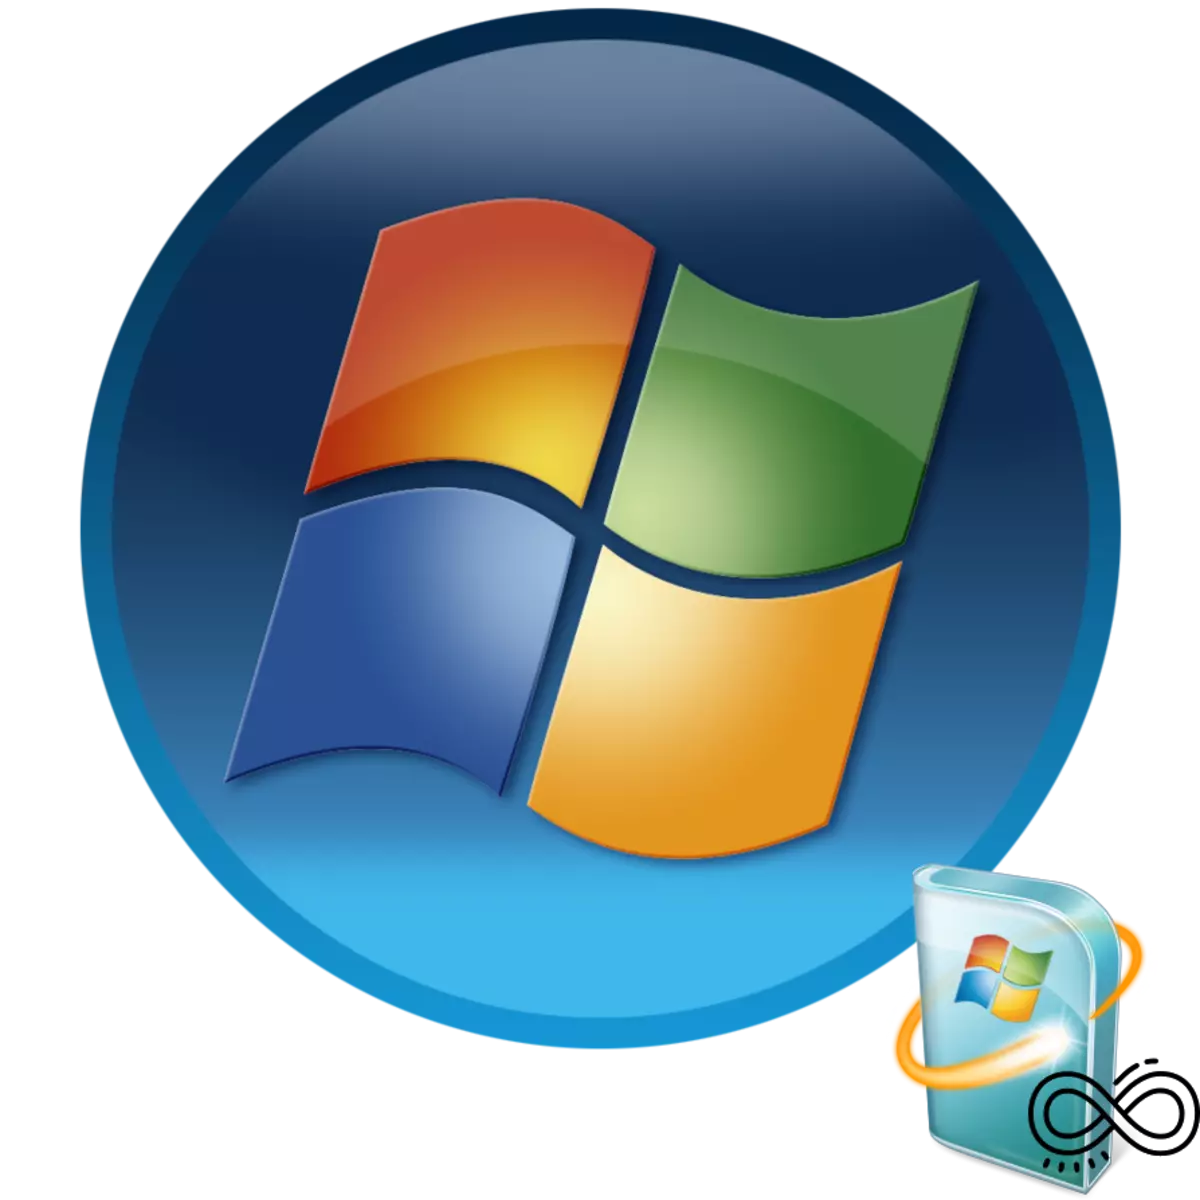 Windows 7 లో నవీకరణల కోసం అనంతమైన శోధన